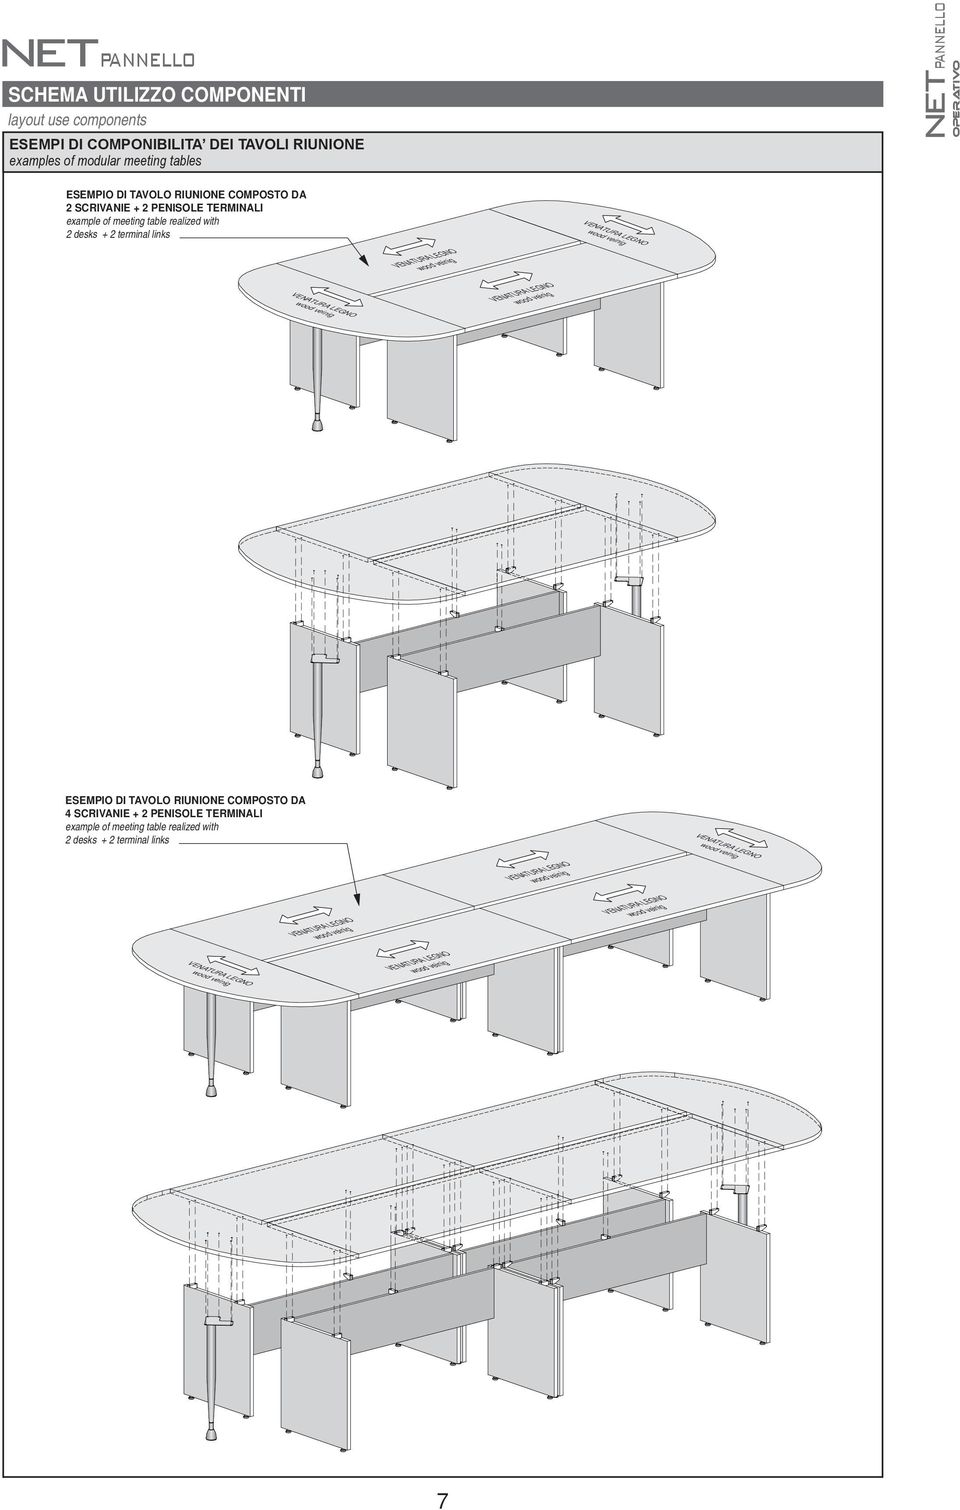 TERMINALI example of meeting table realized with 2 desks + 2 terminal links ESEMPIO DI TAVOLO RIUNIONE